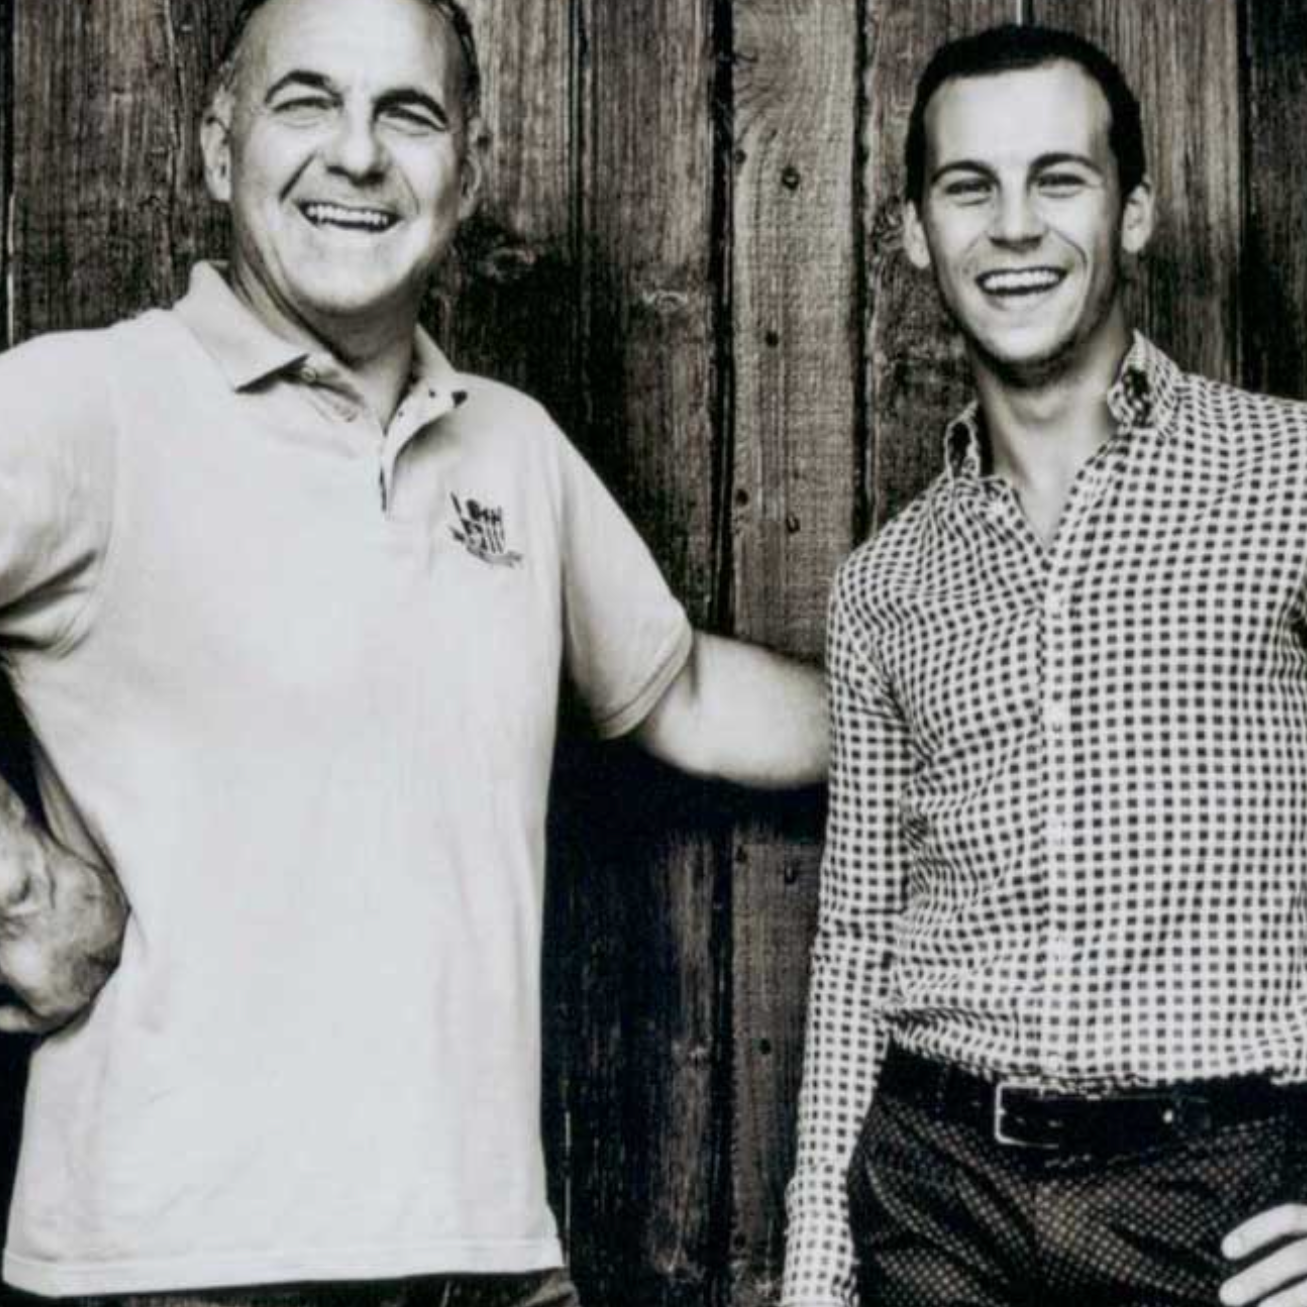 Renato und Stefano Corino- Babarolo